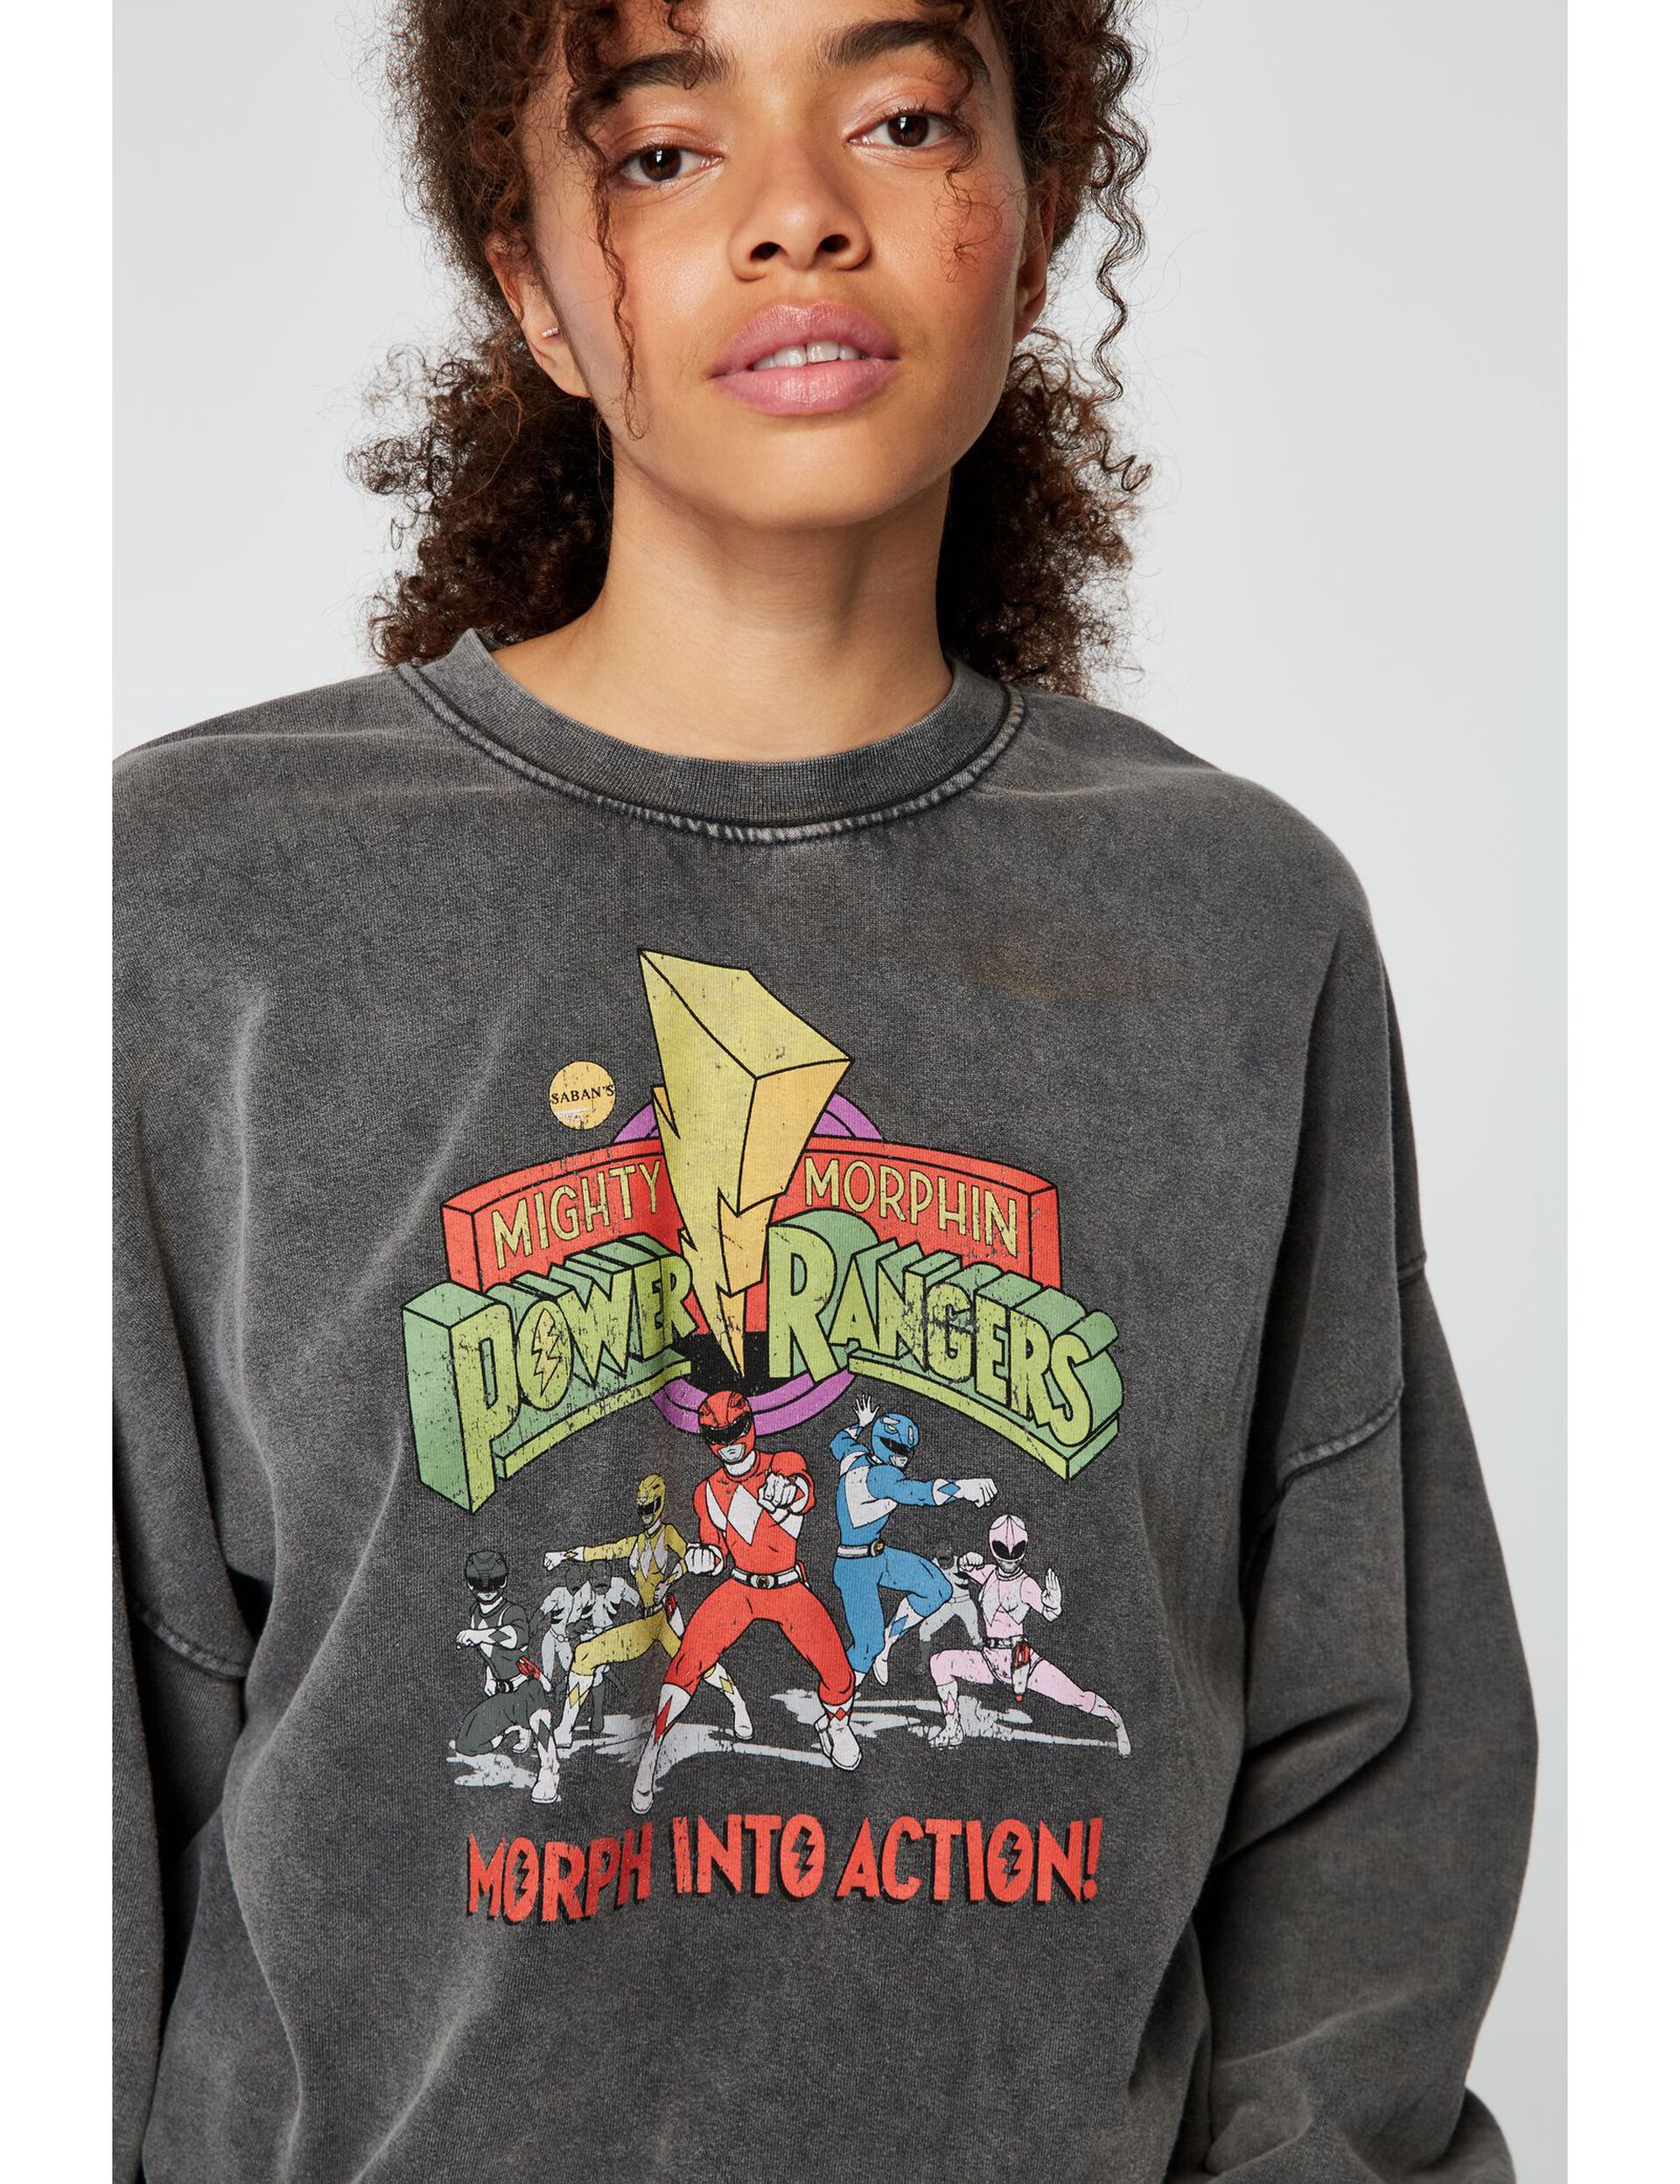 Power Rangers sweatshirt